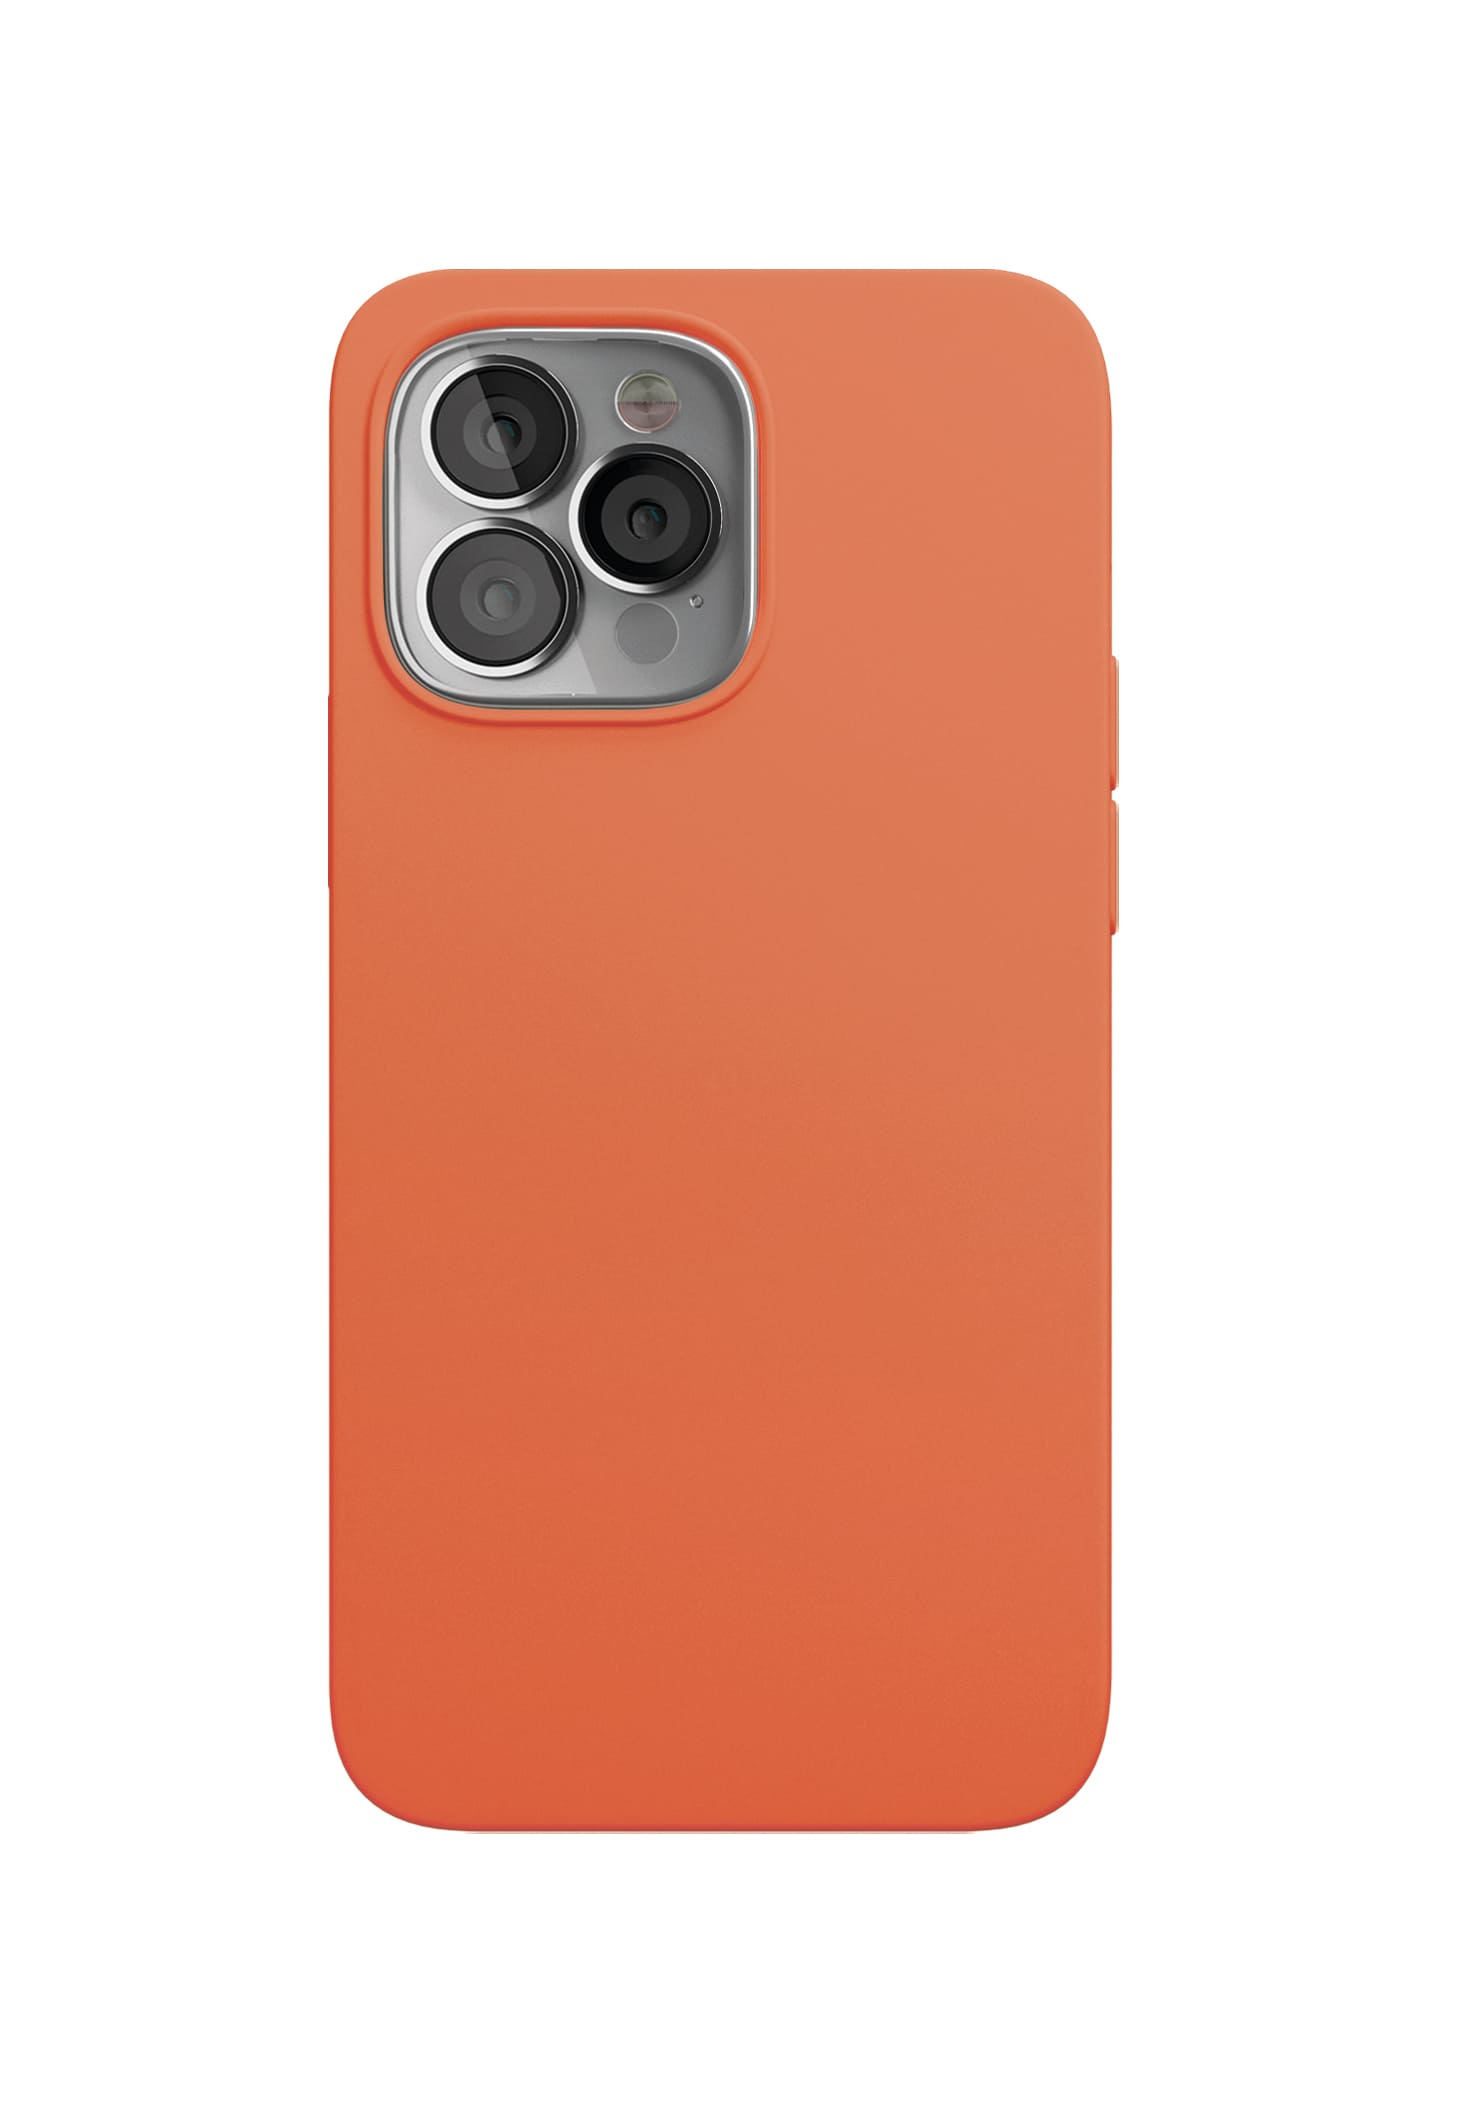 Фото — Чехол для смартфона vlp Silicone case для iPhone 13 Pro Max, оранжевый